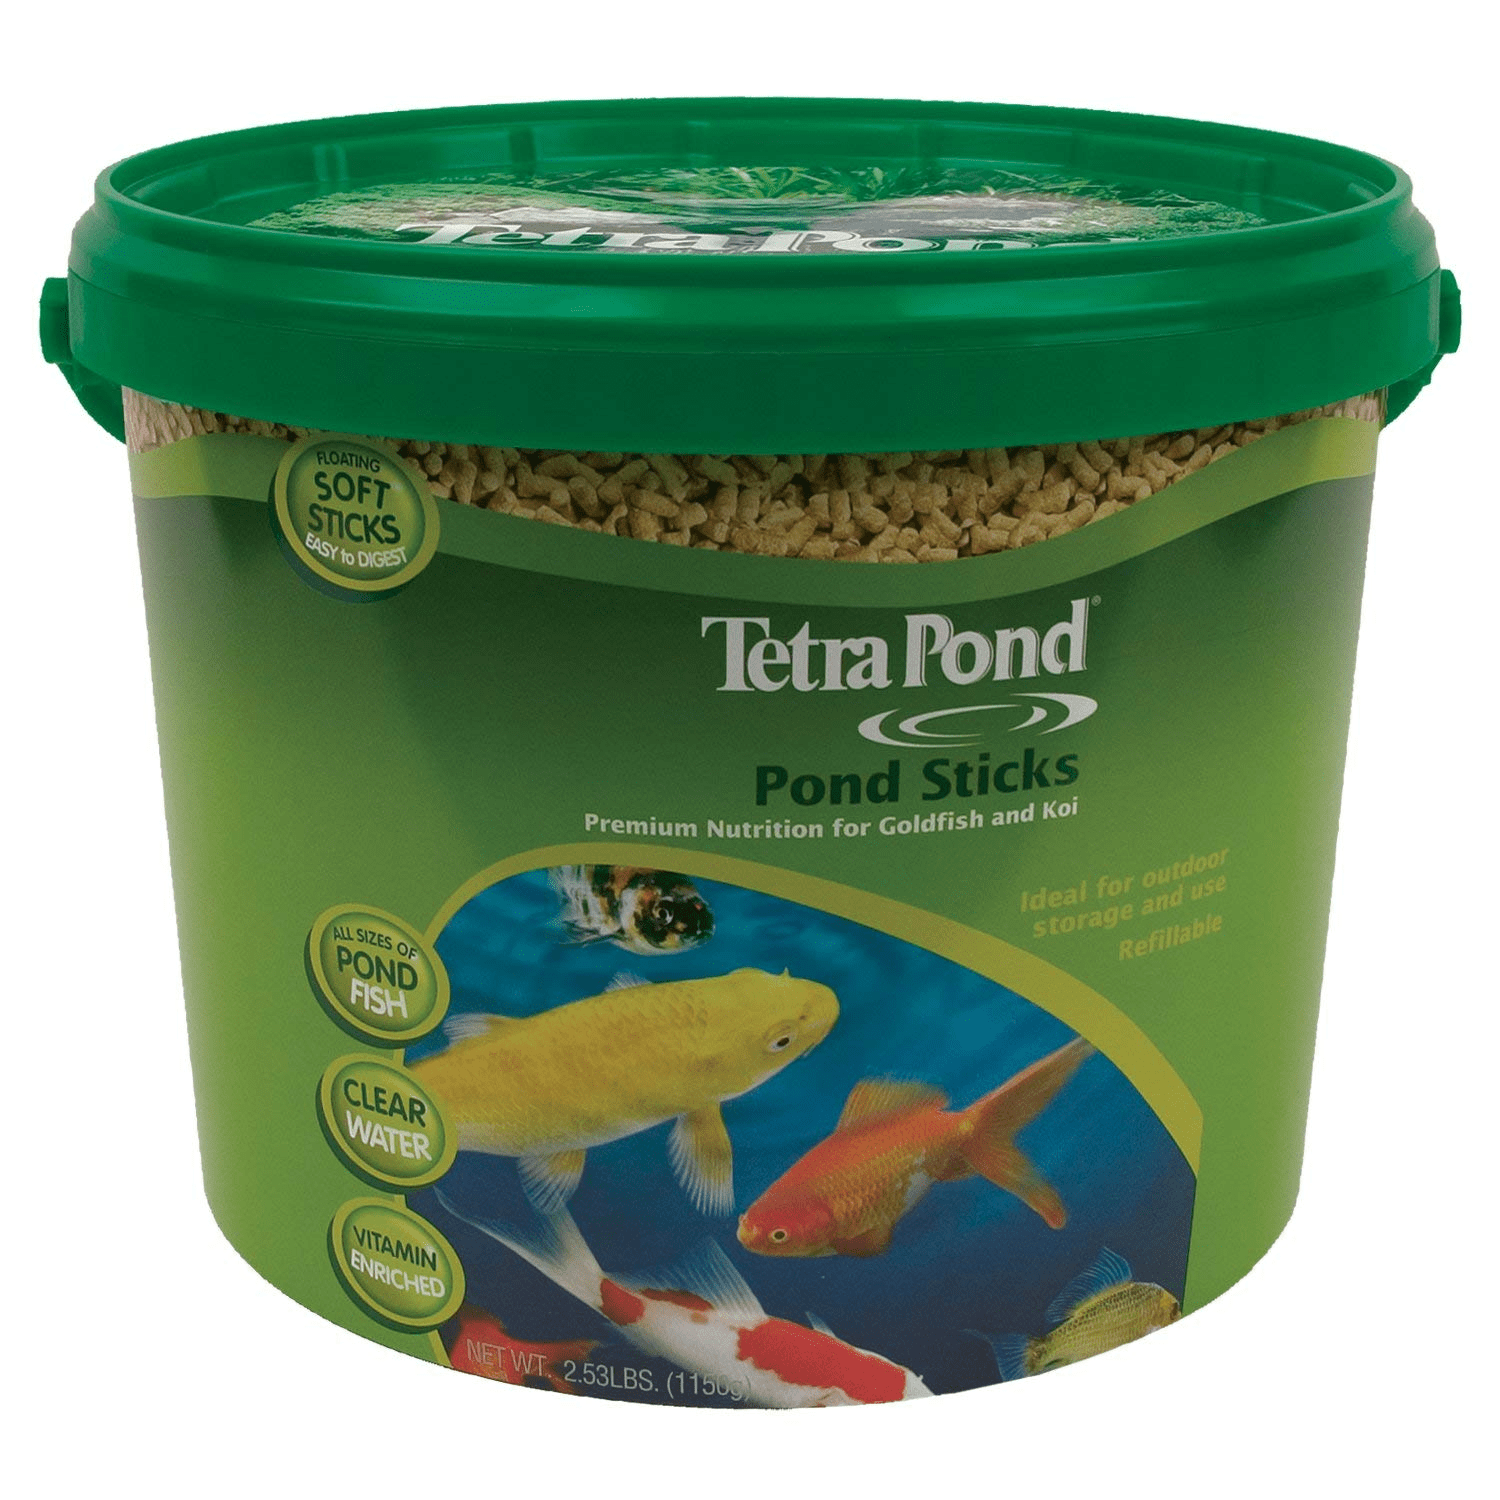 Tetra Pond Sticks 2.65 Pounds, Pond Fish Food, for Goldfish and Koi 